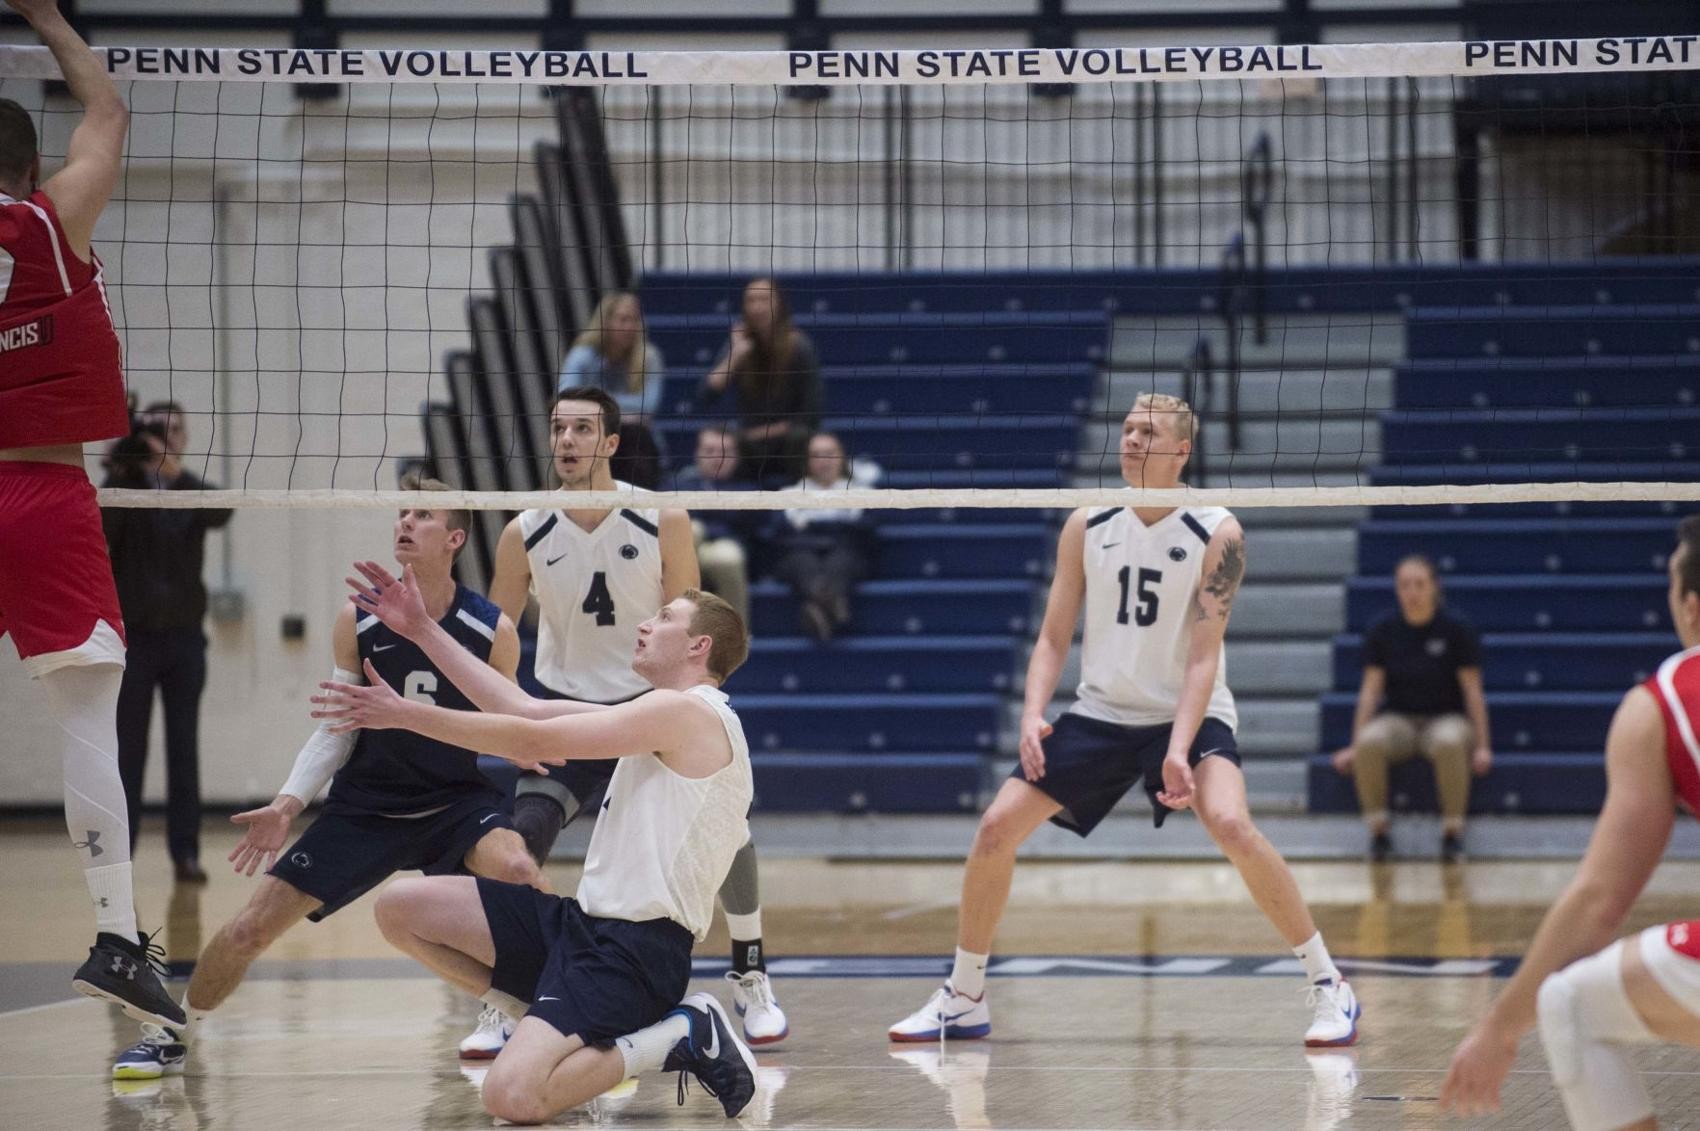 Penn State men’s volleyball wraps up regular season | Reporter's notebook